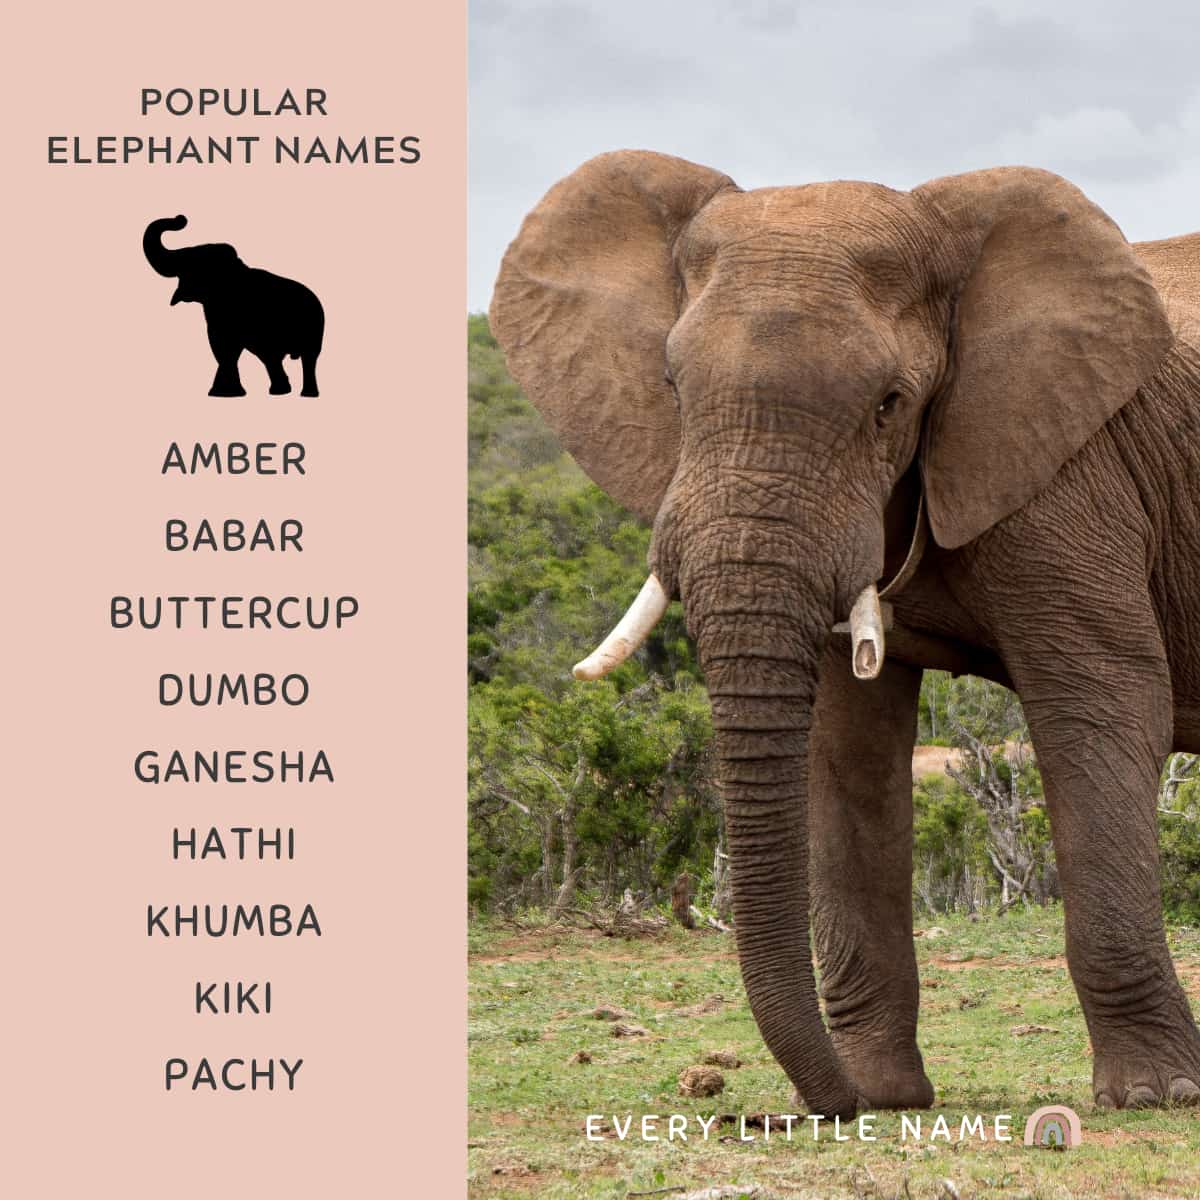 Wild elephant in the safari and popular elephant names.